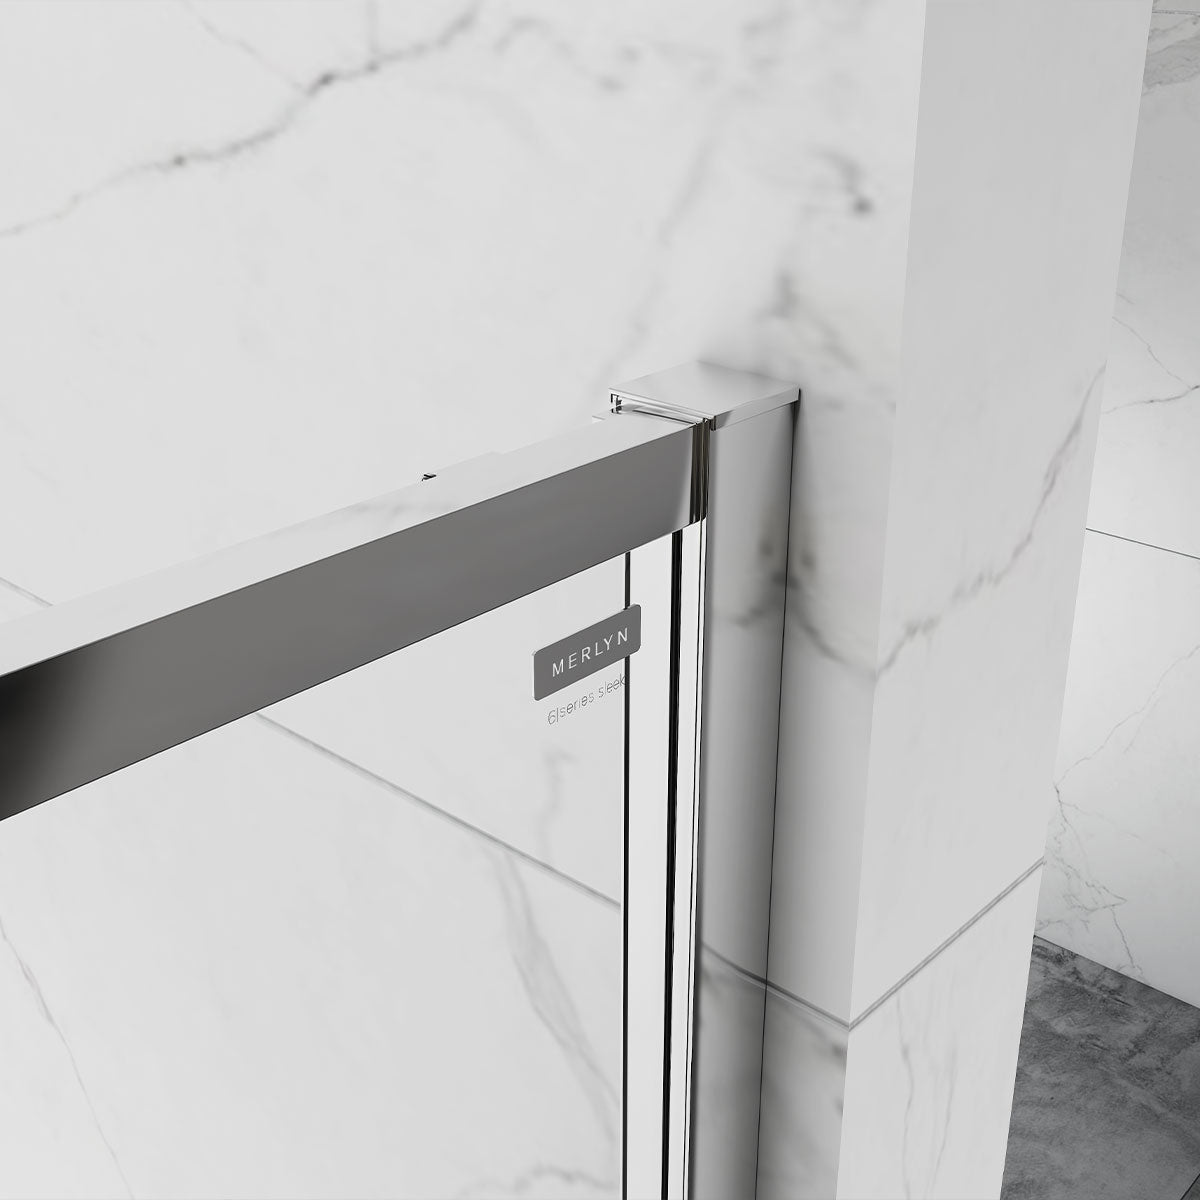 Merlyn 6 Series Sleek Sliding Shower Door In Recess With Inline Panel Close Up